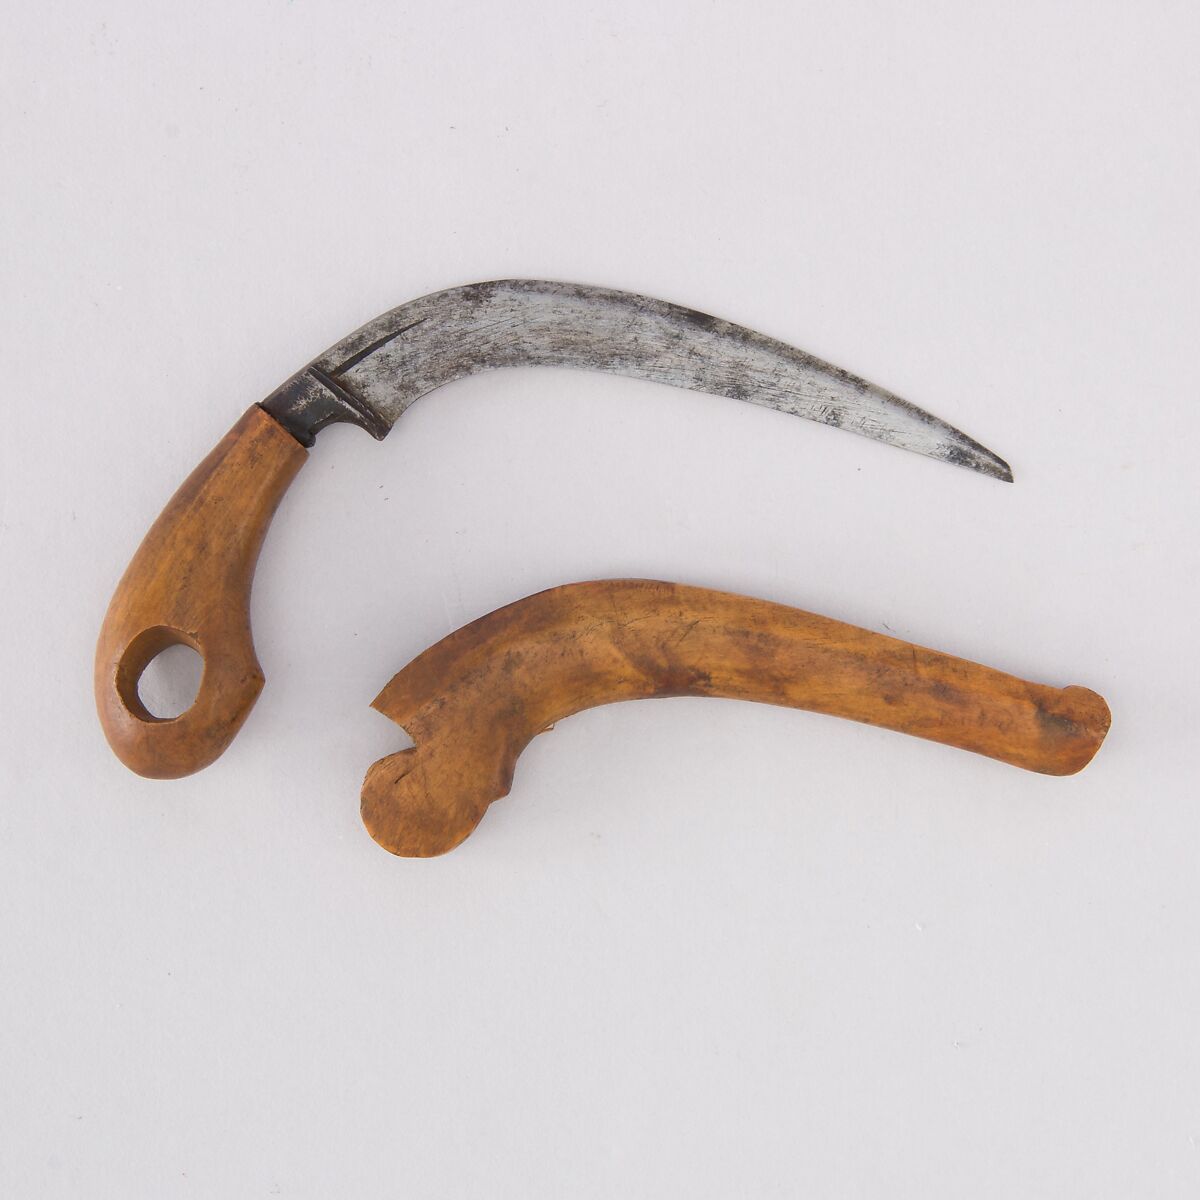 Knife (Korambi) with Sheath, Wood, steel, Indonesian, Sulawesi 